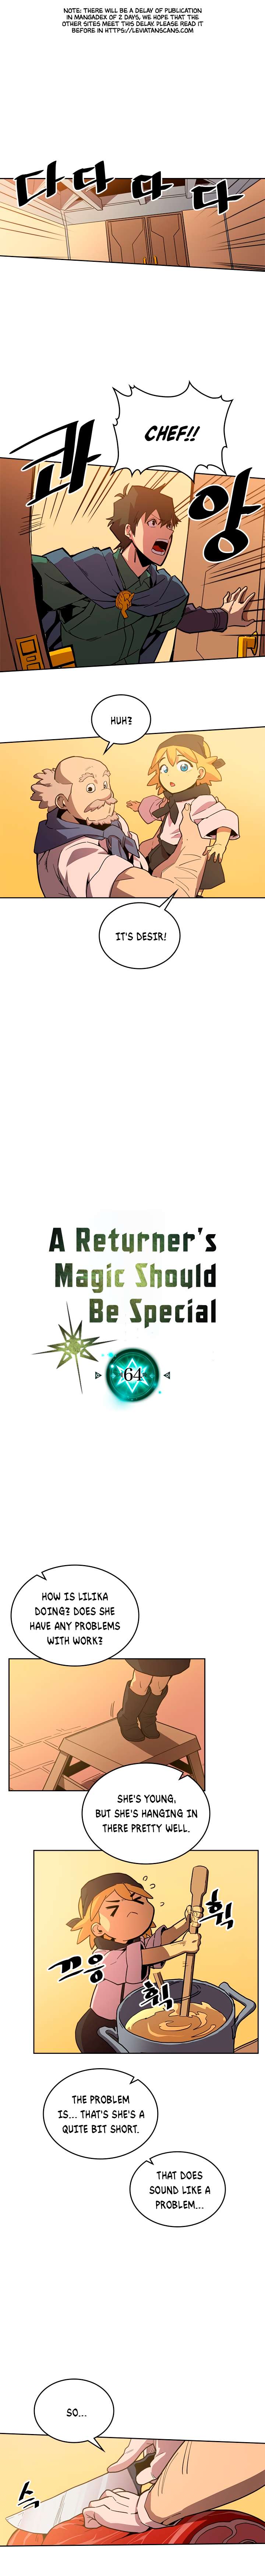 a_returners_magic_should_be_special_64_1